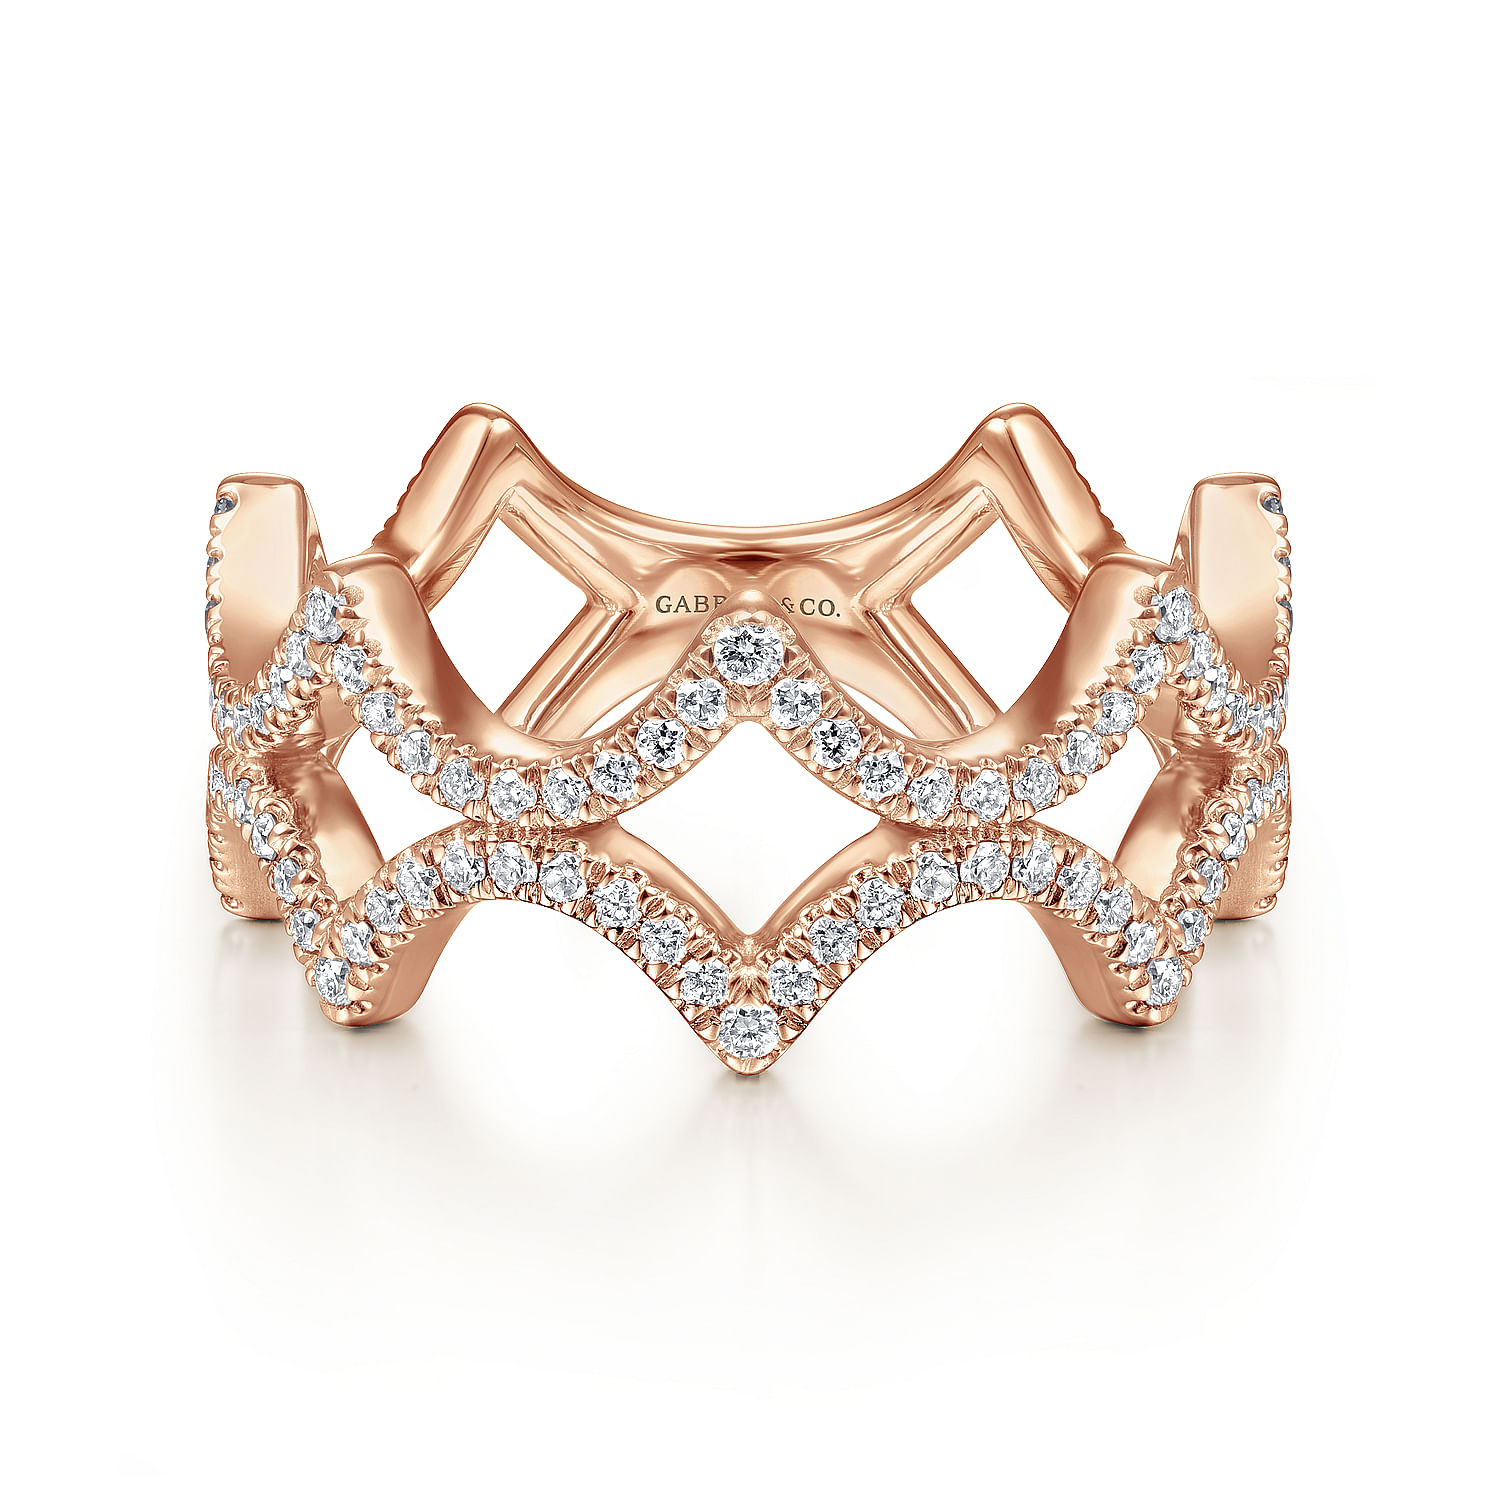 14K Rose Gold Open Triangular Diamond Ring